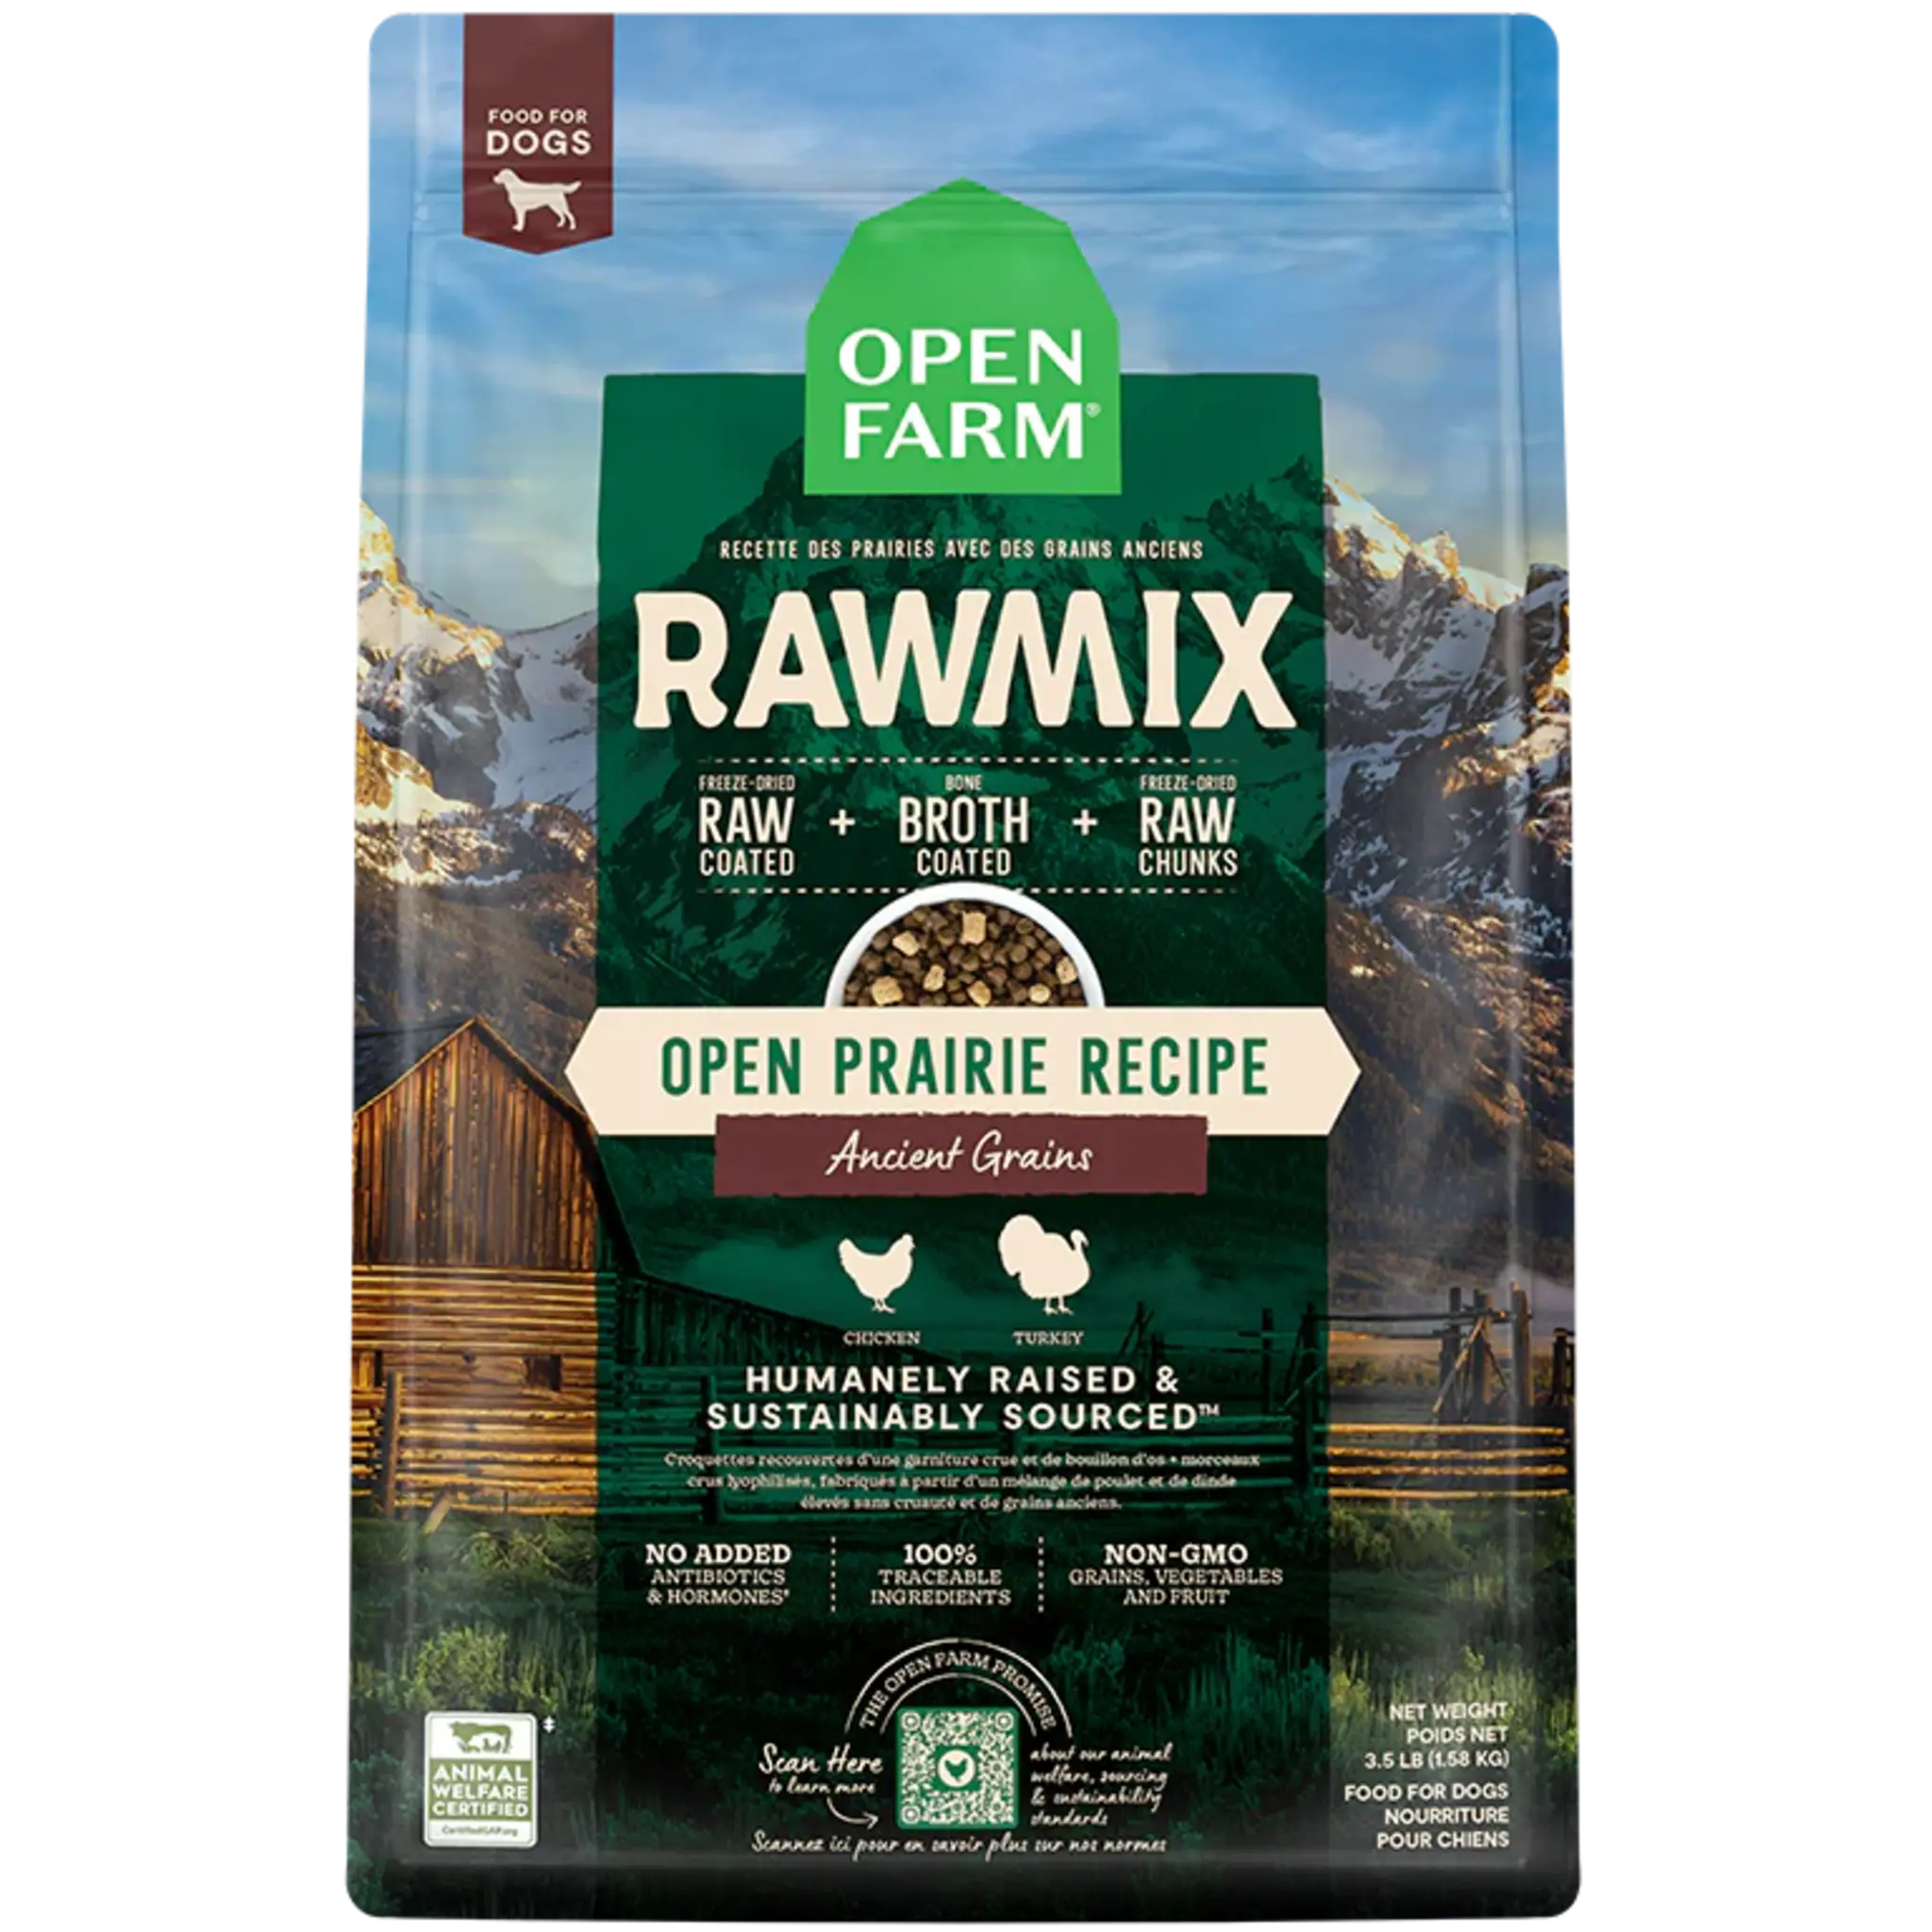 Open Farm RawMix Open Prairie & Ancient Grains Dog Food